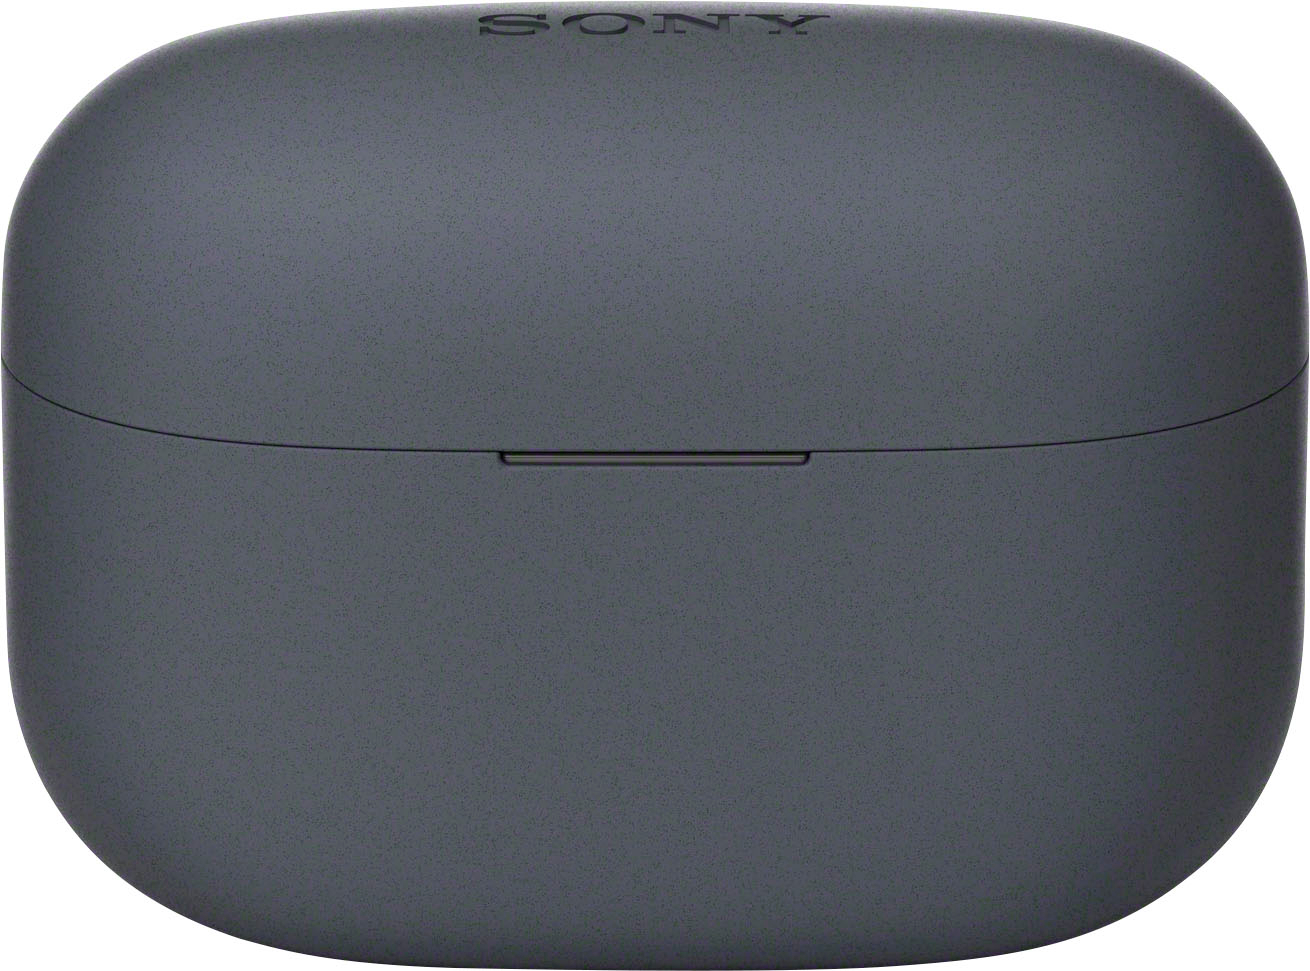 Sony WF-1000XM4: Leaked information reveals pricing, notable improvements  over predecessor - SoyaCincau